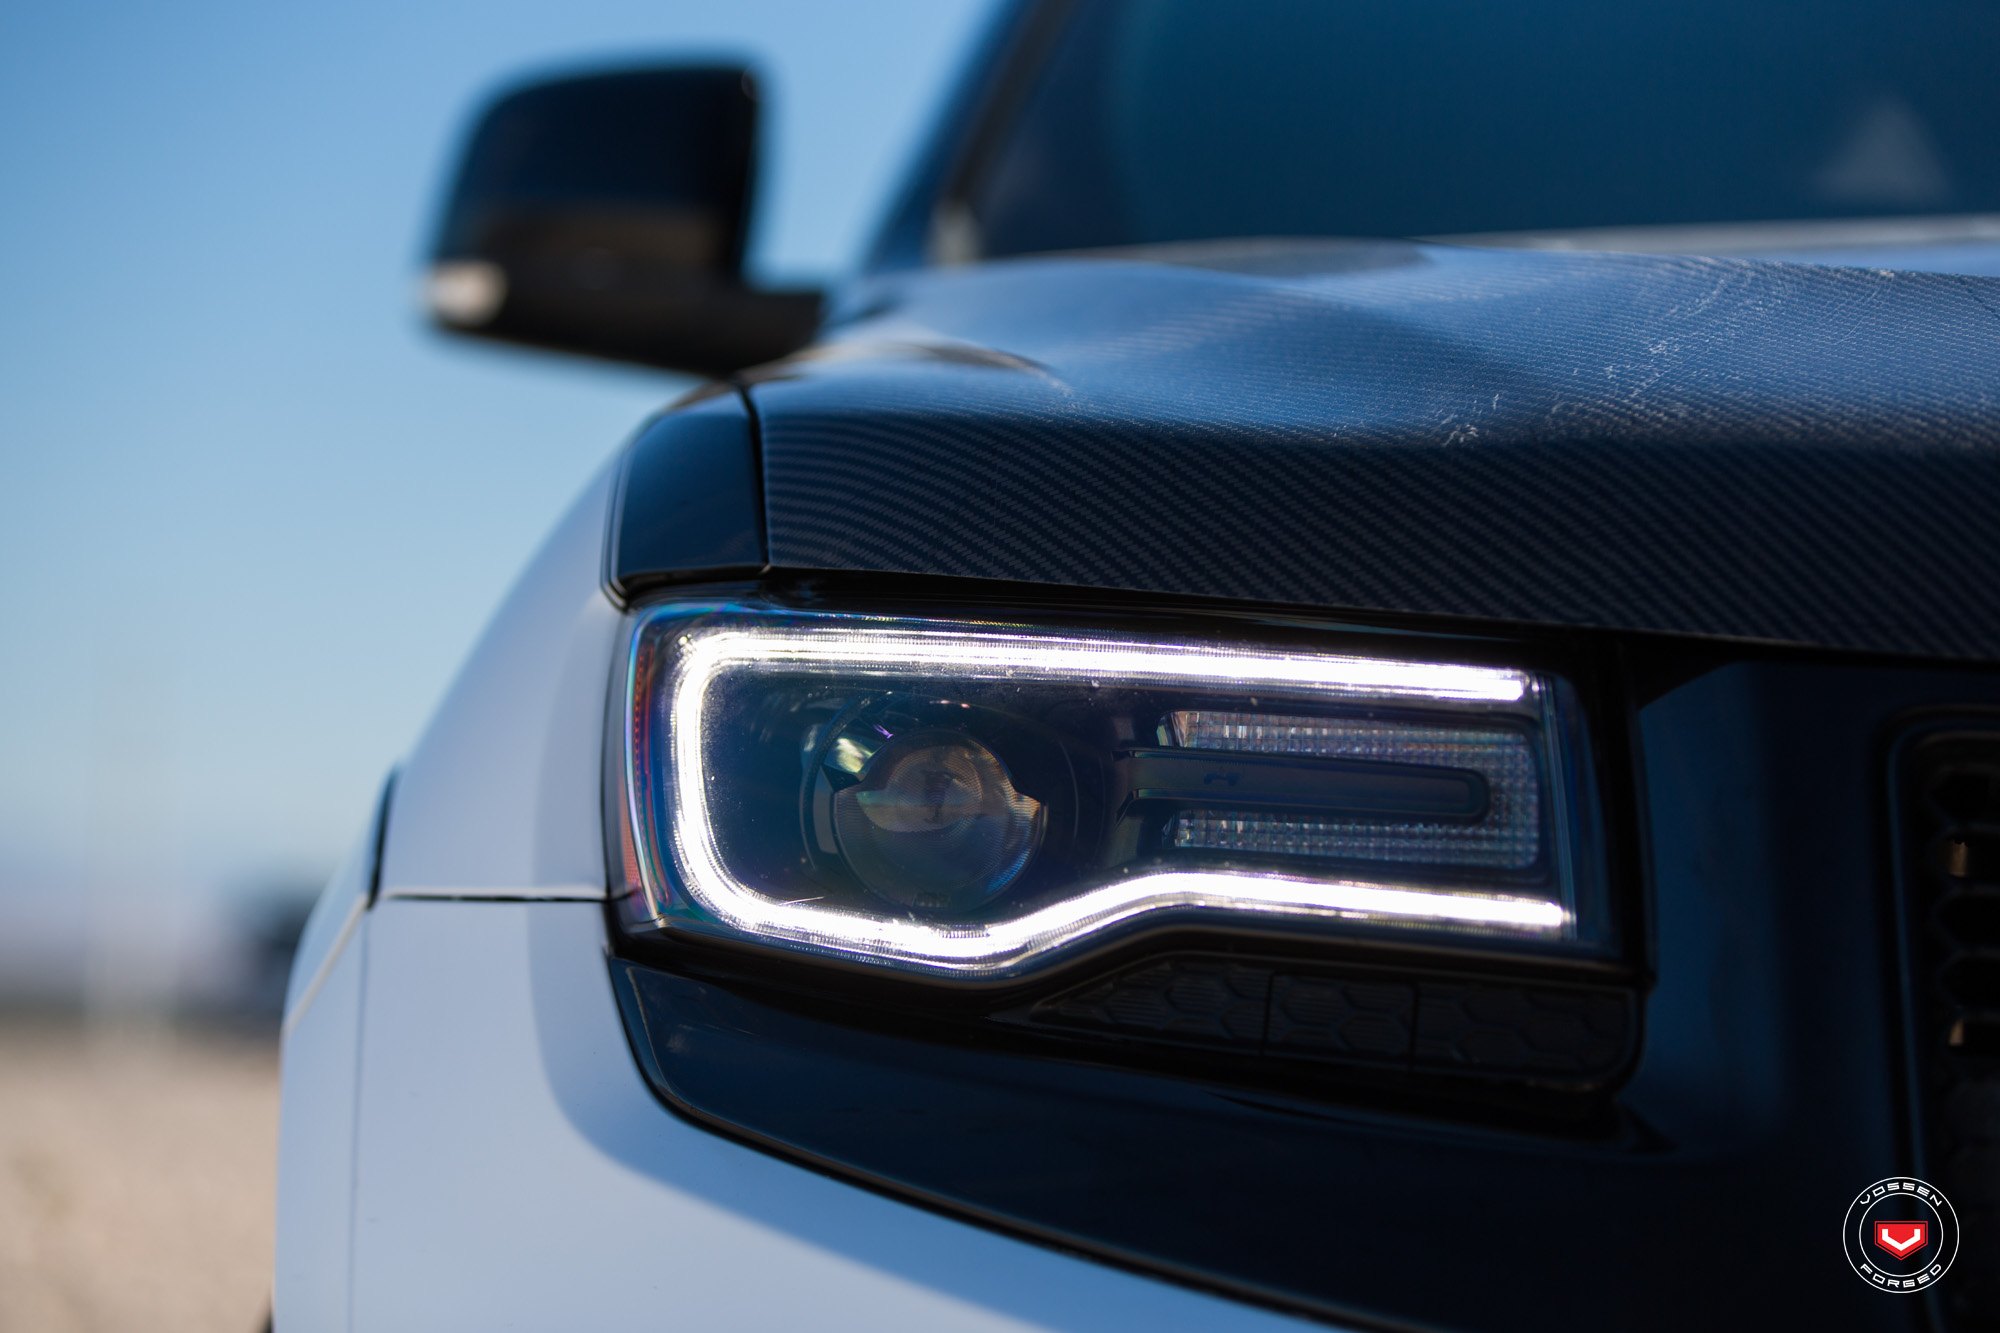 Jeep Grand Cherokee SRT LED DRL Headlights - Photo by Vossen